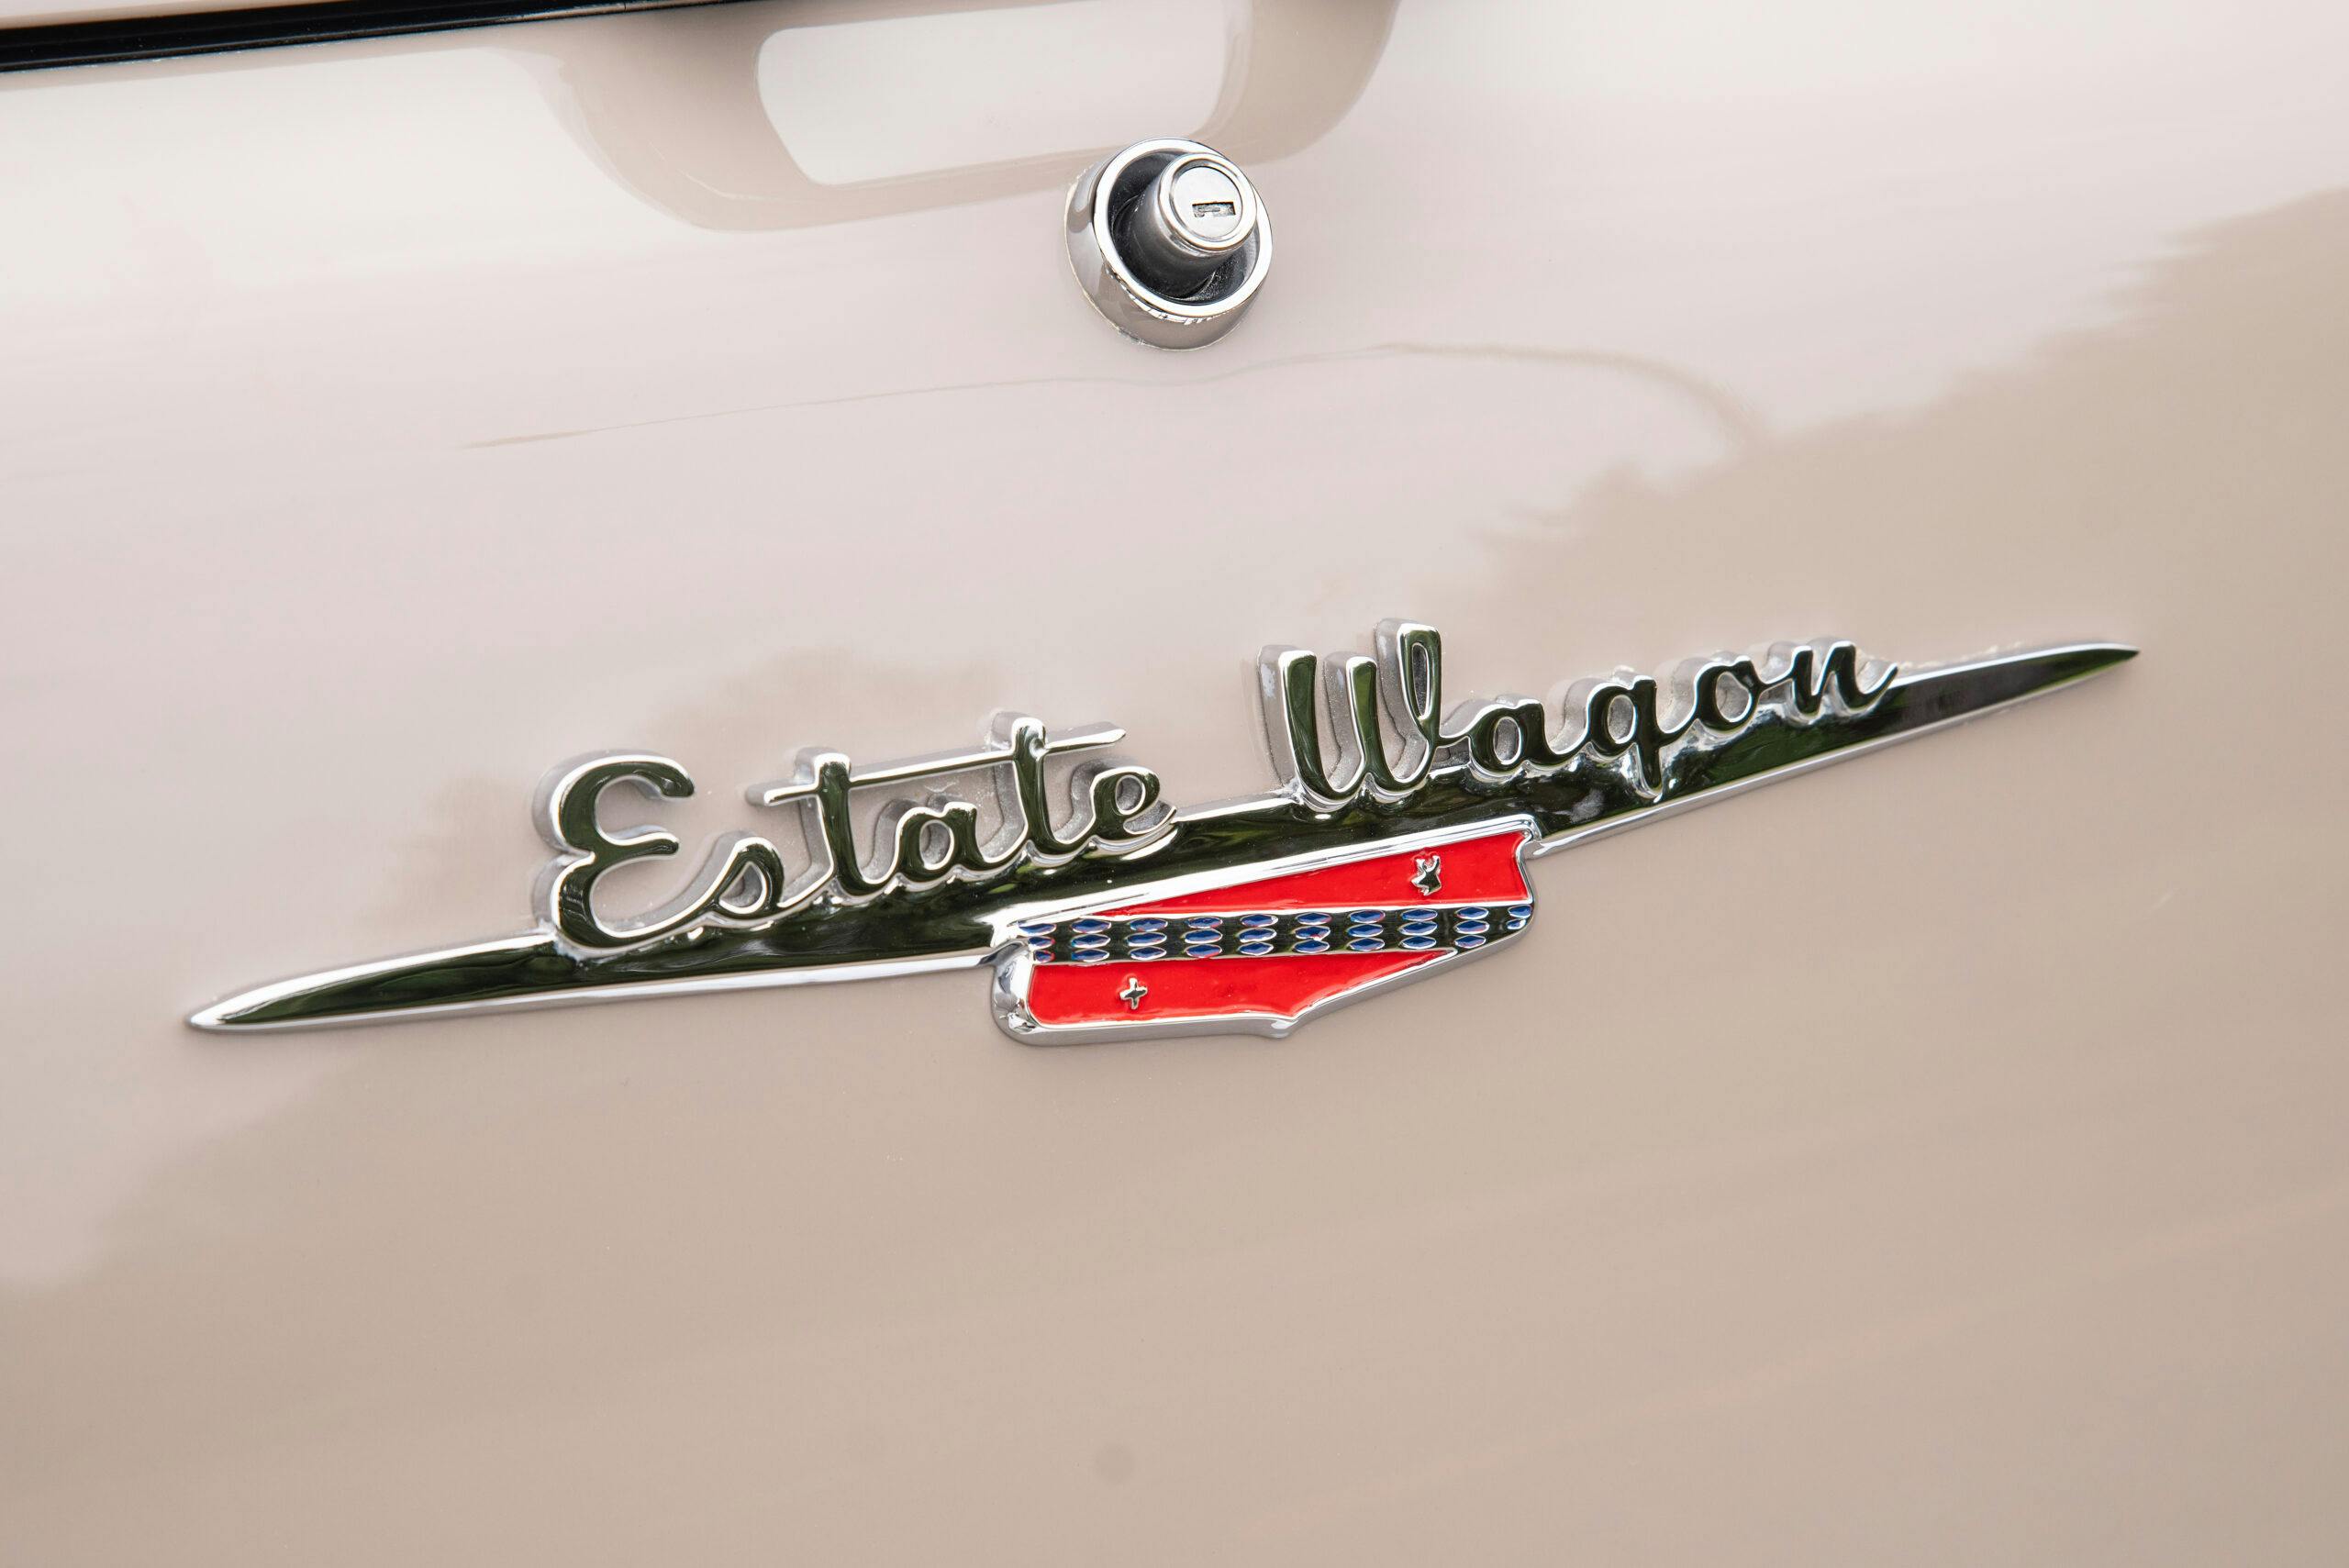 1957 Buick Estate Wagon badge